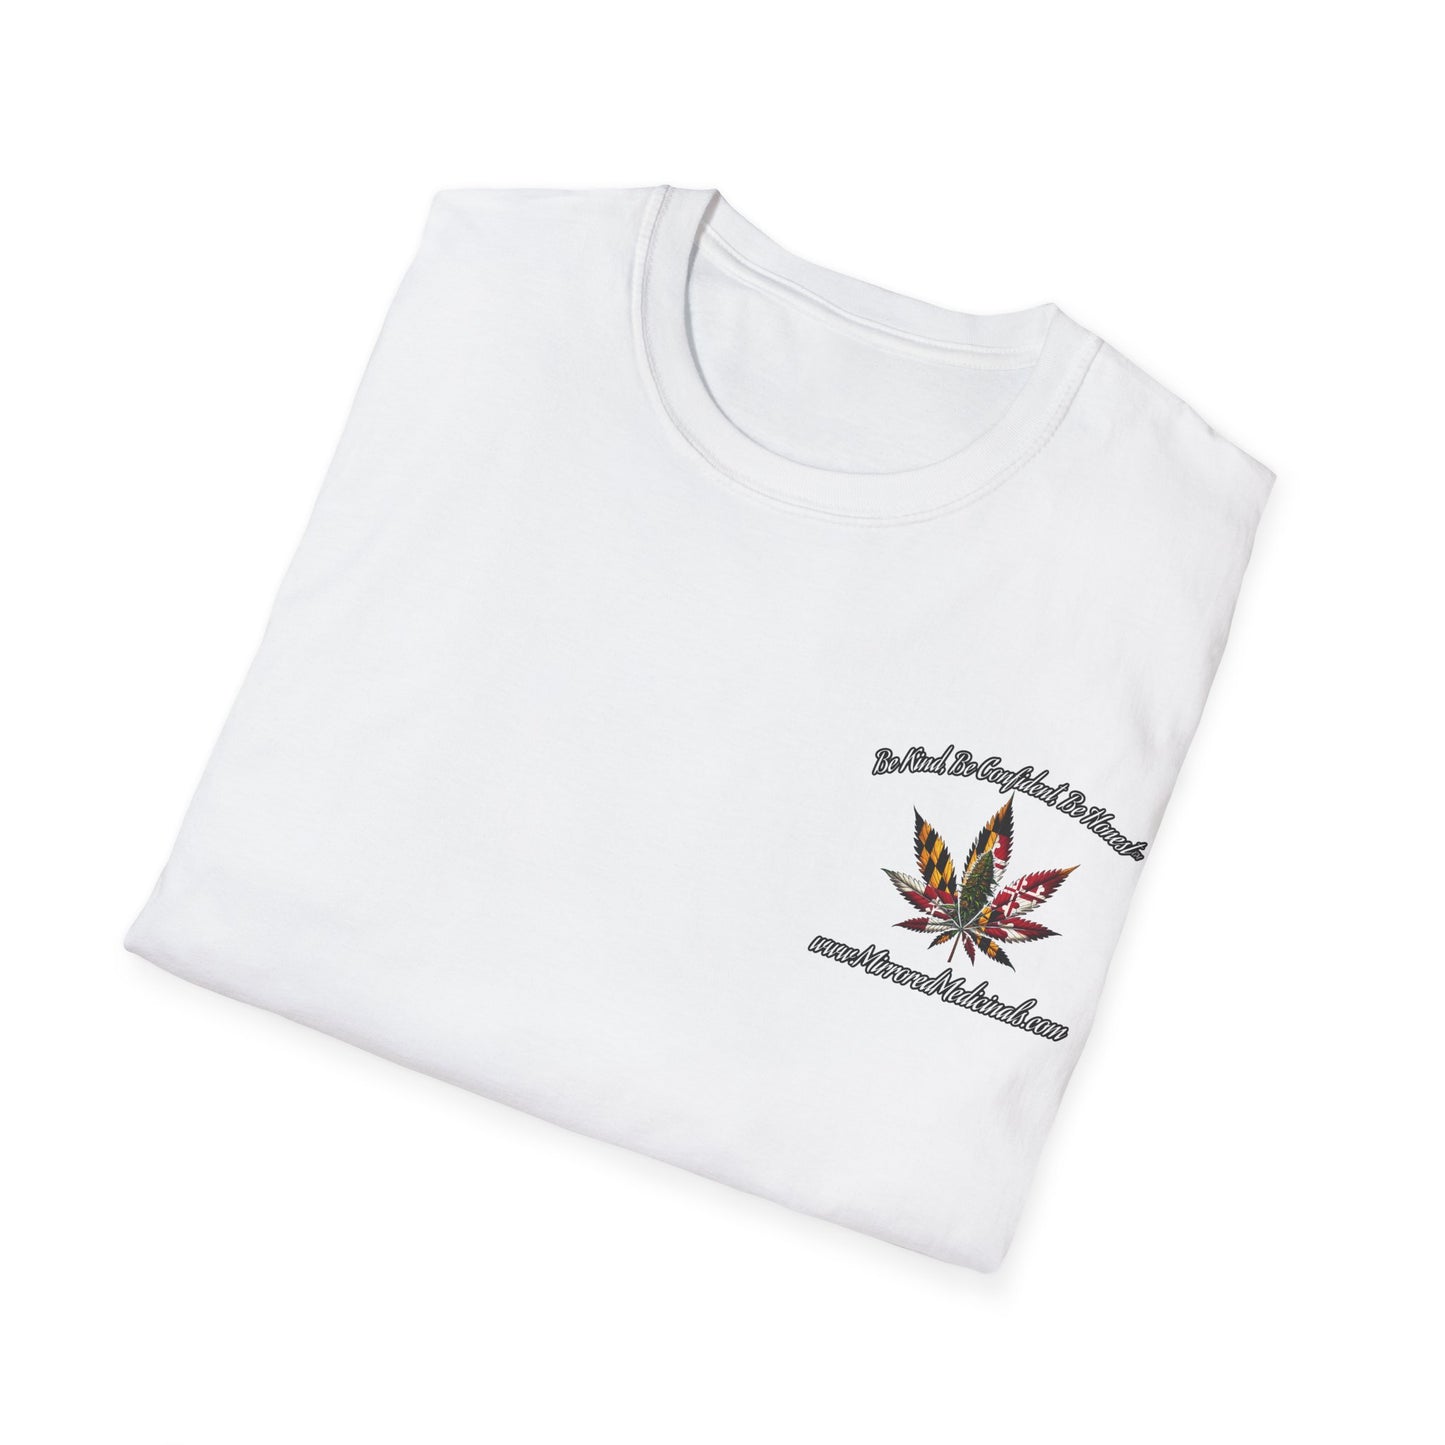 Crow 2 - Unisex Softstyle T-Shirt